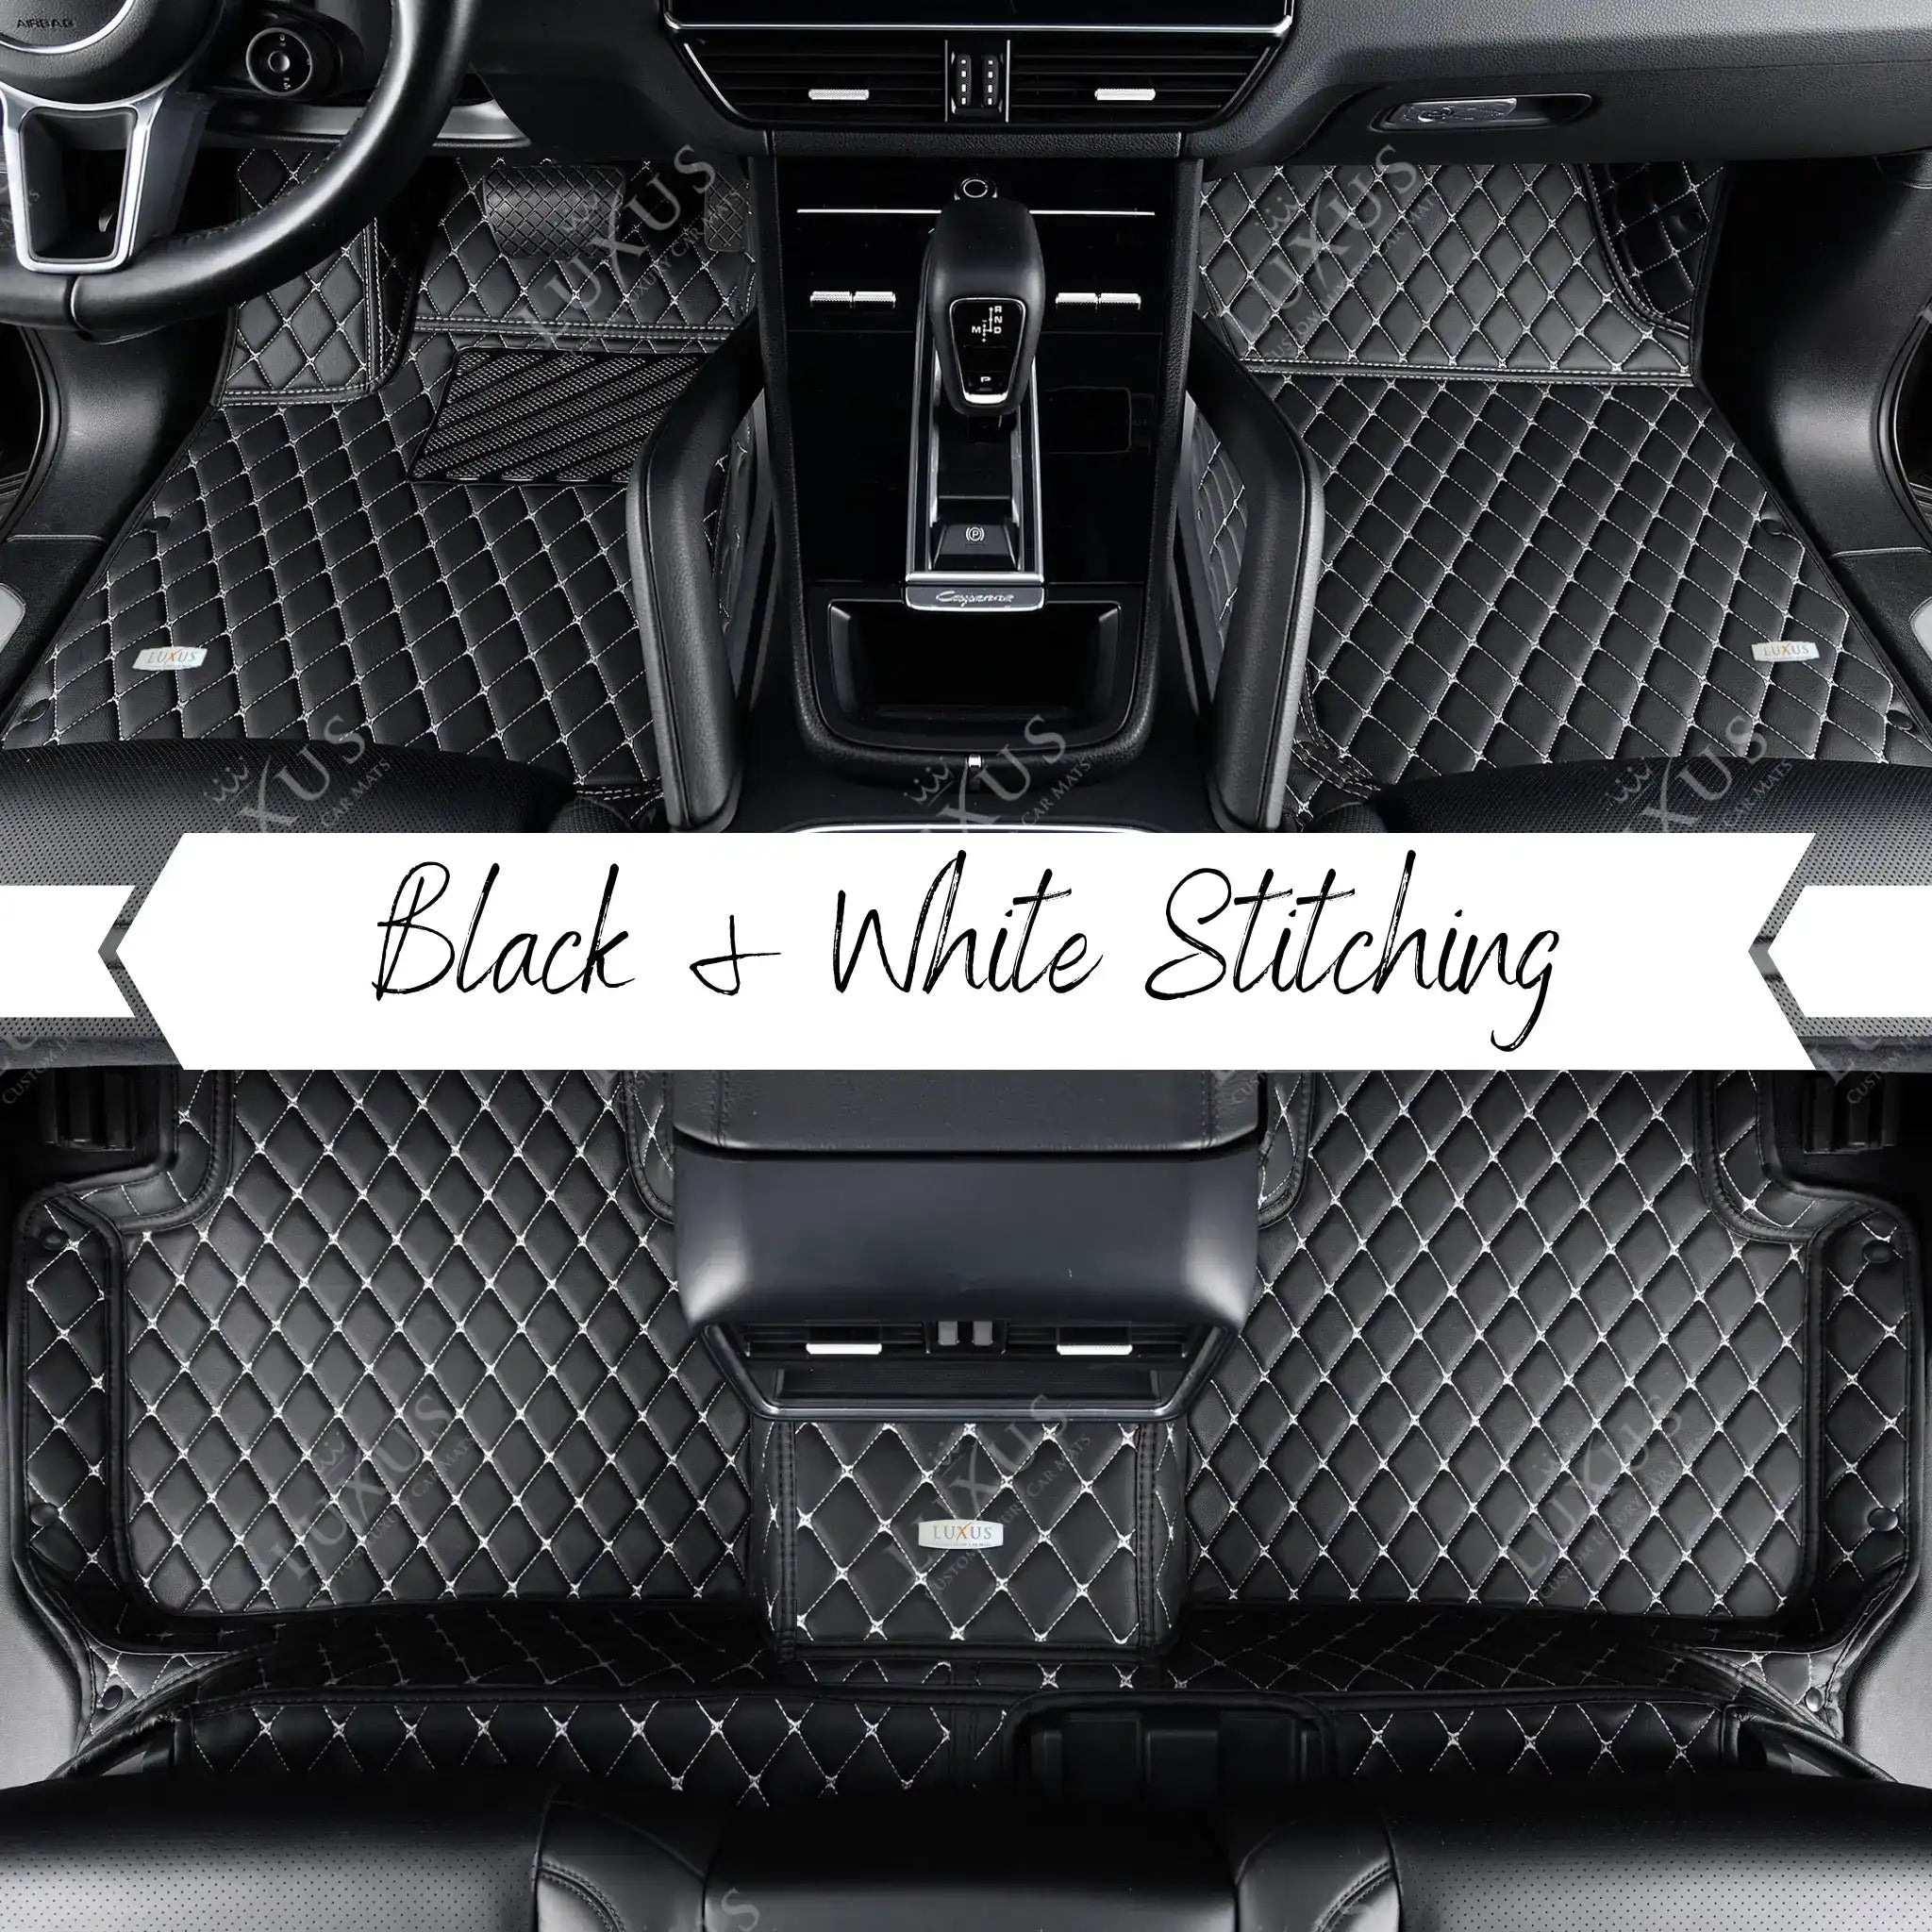 100% Fit Custom Made Leather Car Floor Mats For Vw Volkswagen Gol